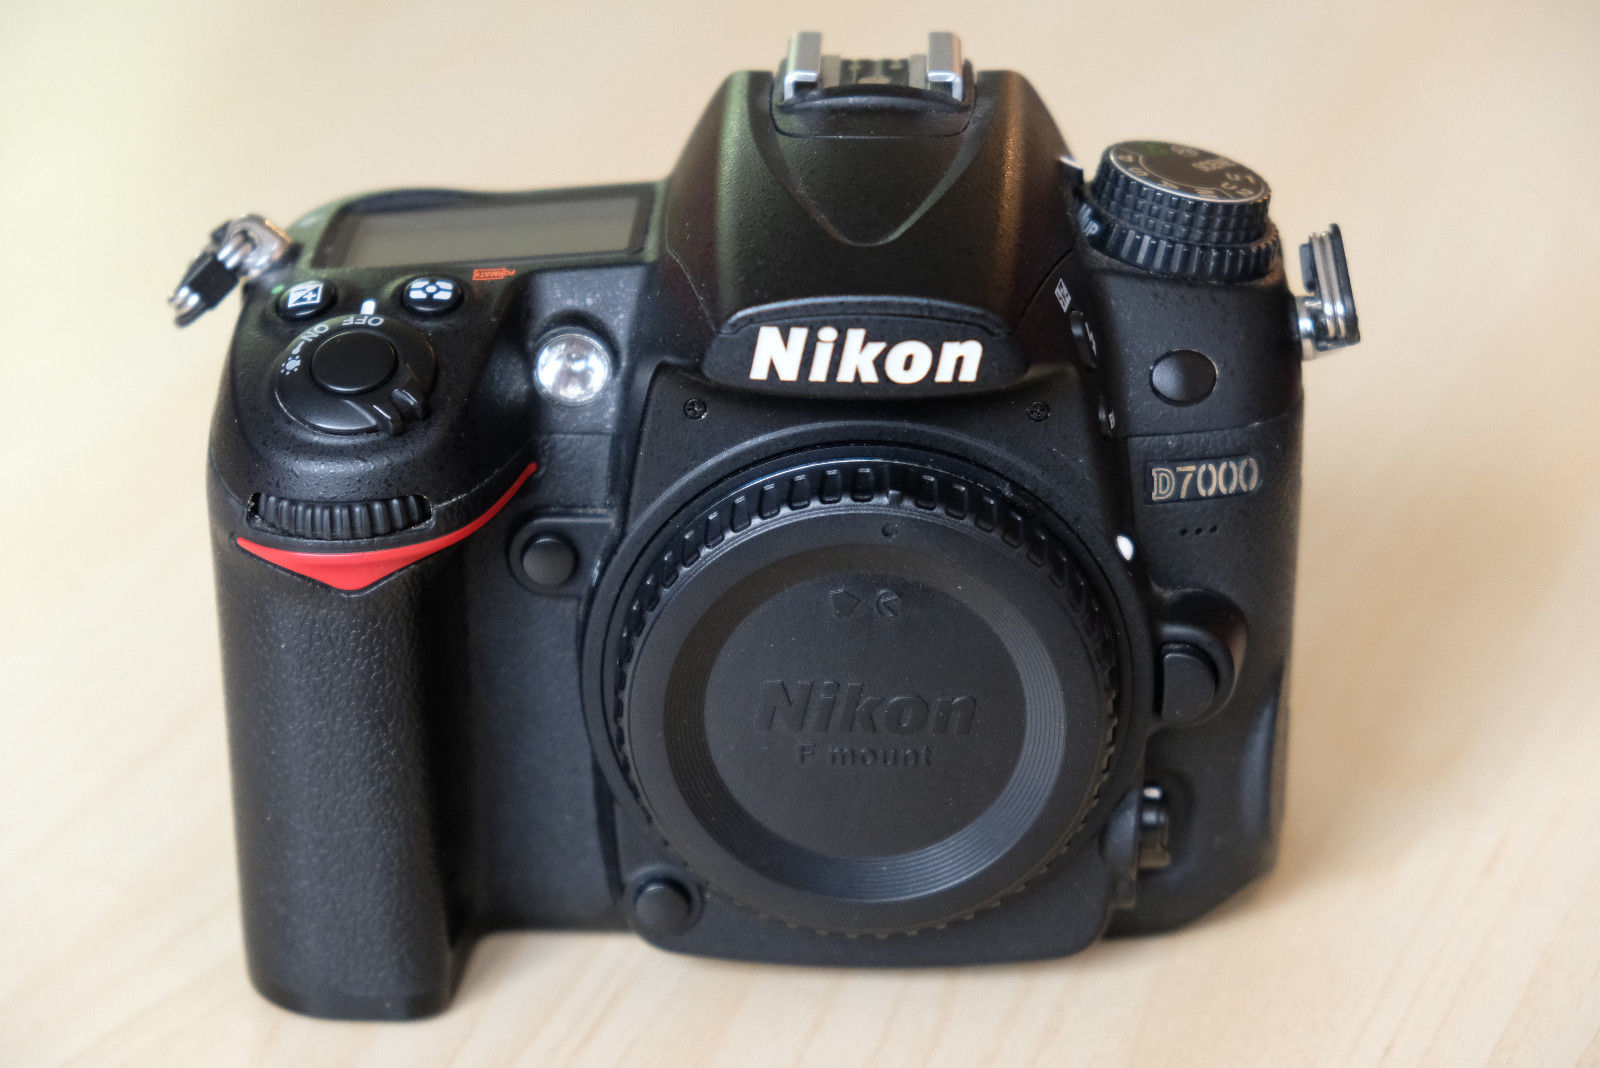 Nikon D7000 Spiegelreflexkamera OVP - 12.100 Auslösungen